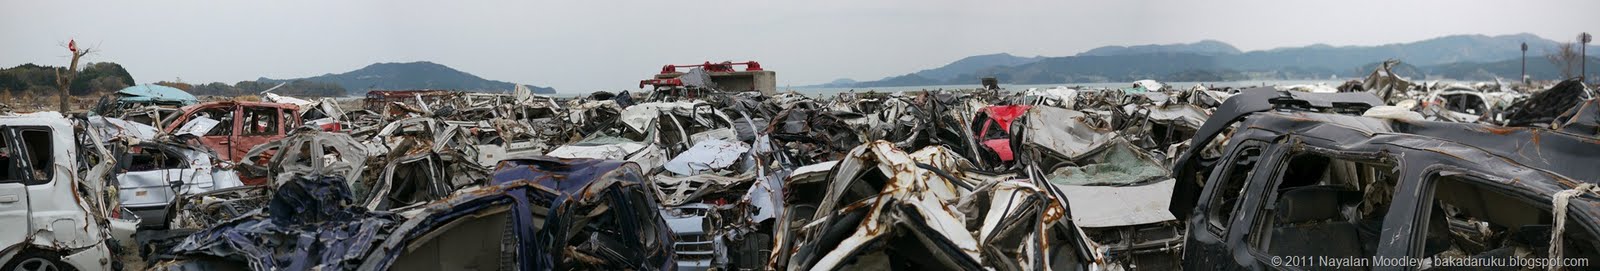 [PANORAMA 002 Rikuzentakada Car dumpSmall[3].jpg]